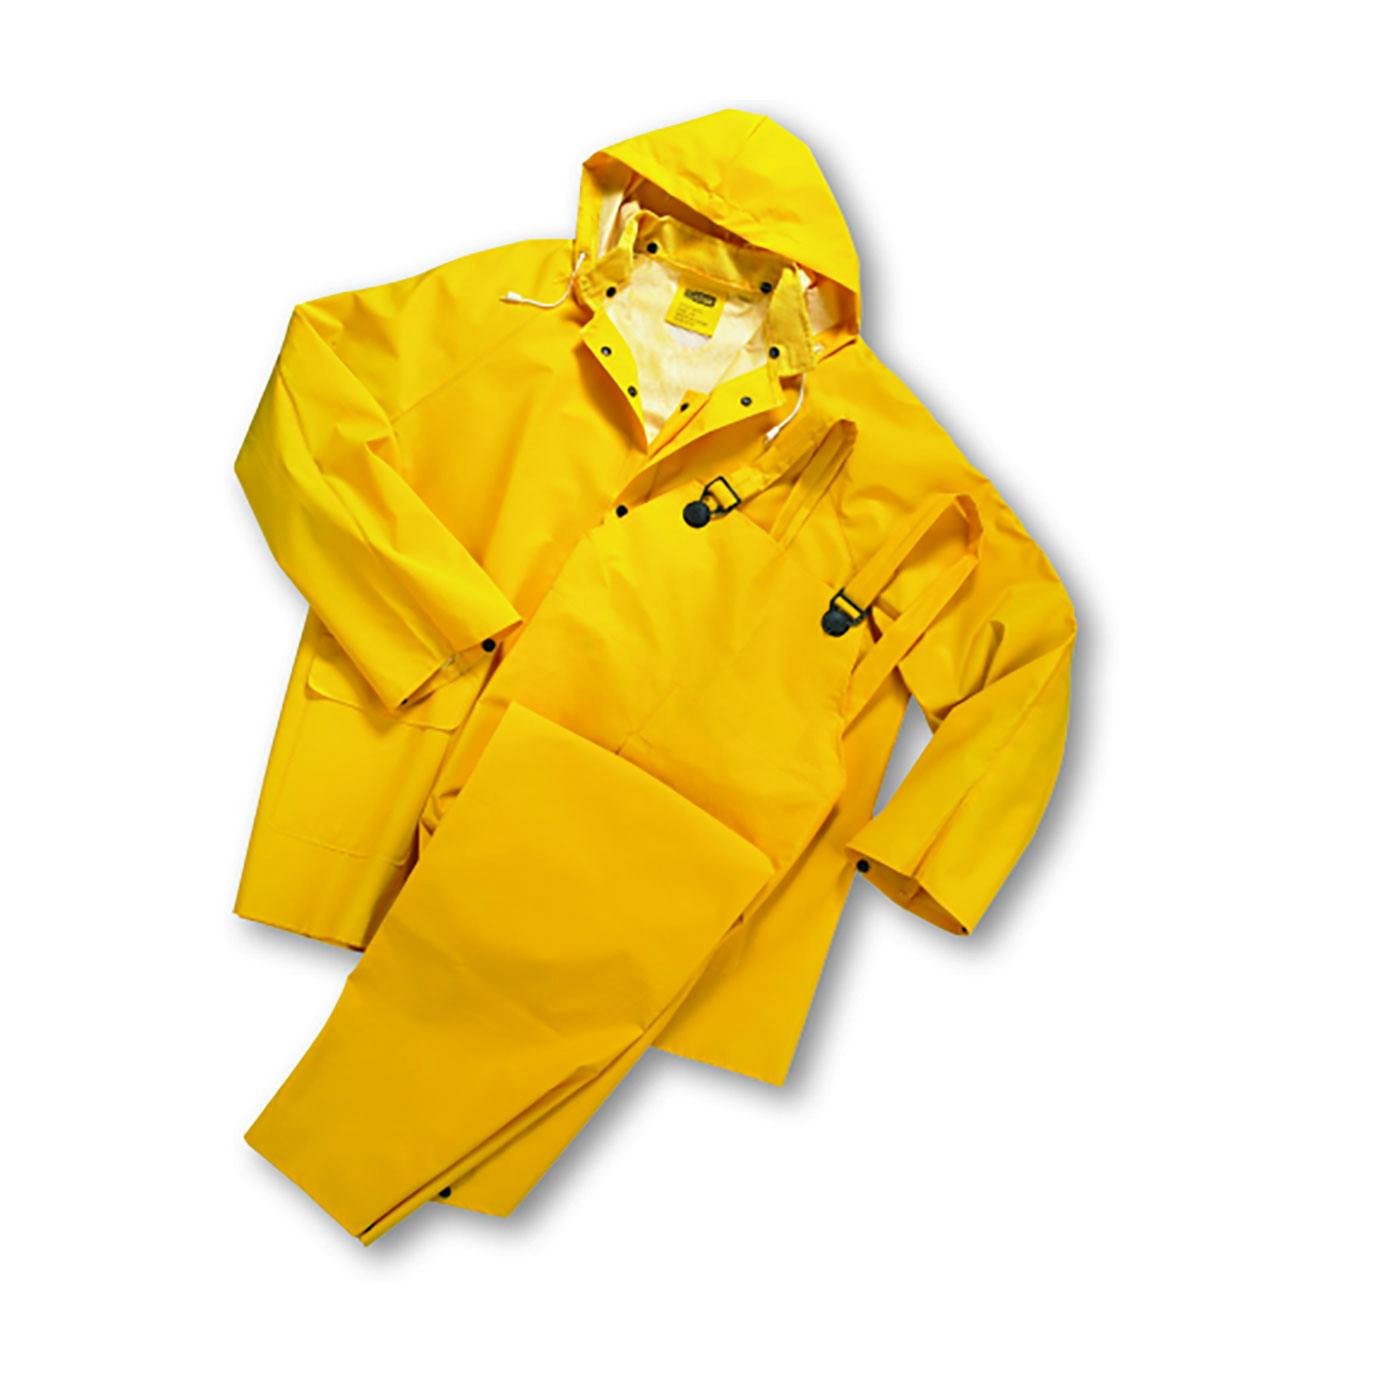 Three-Piece Rainsuit - 0.35mm, Yellow (4035)